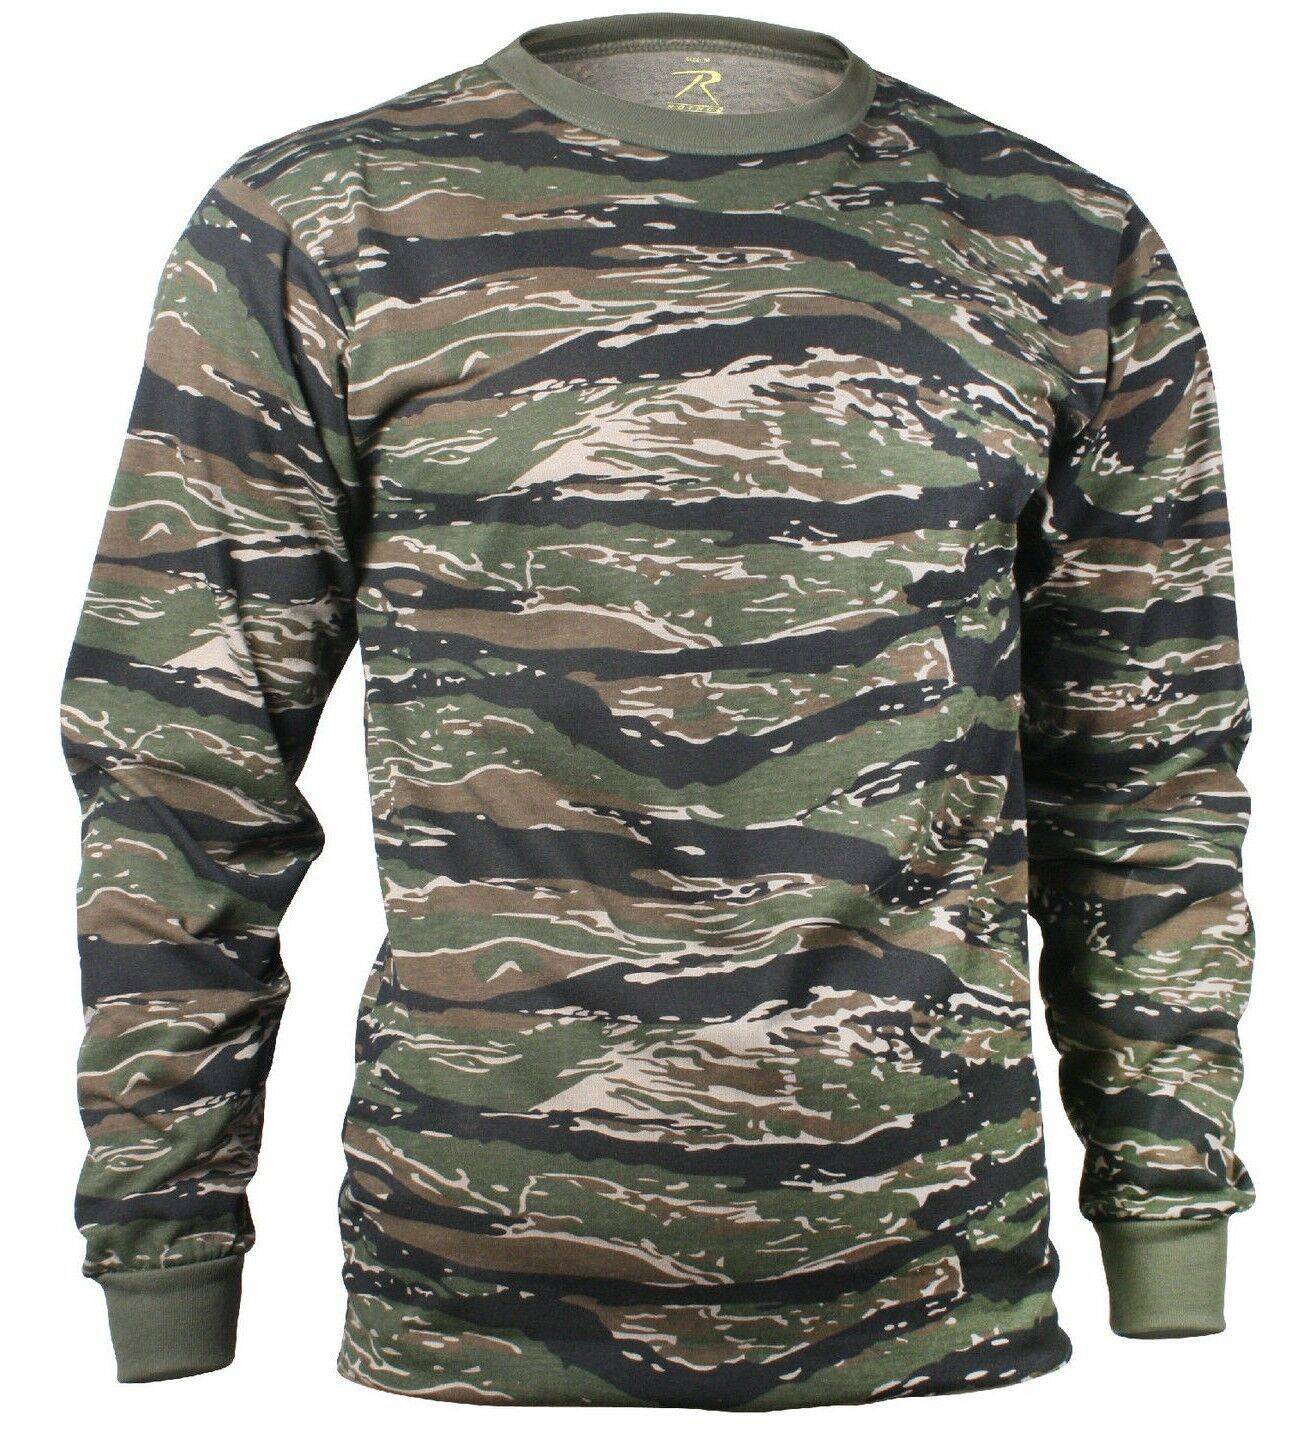 Rothco Long Sleeve Camo T-Shirt - Tiger Stripe Camo